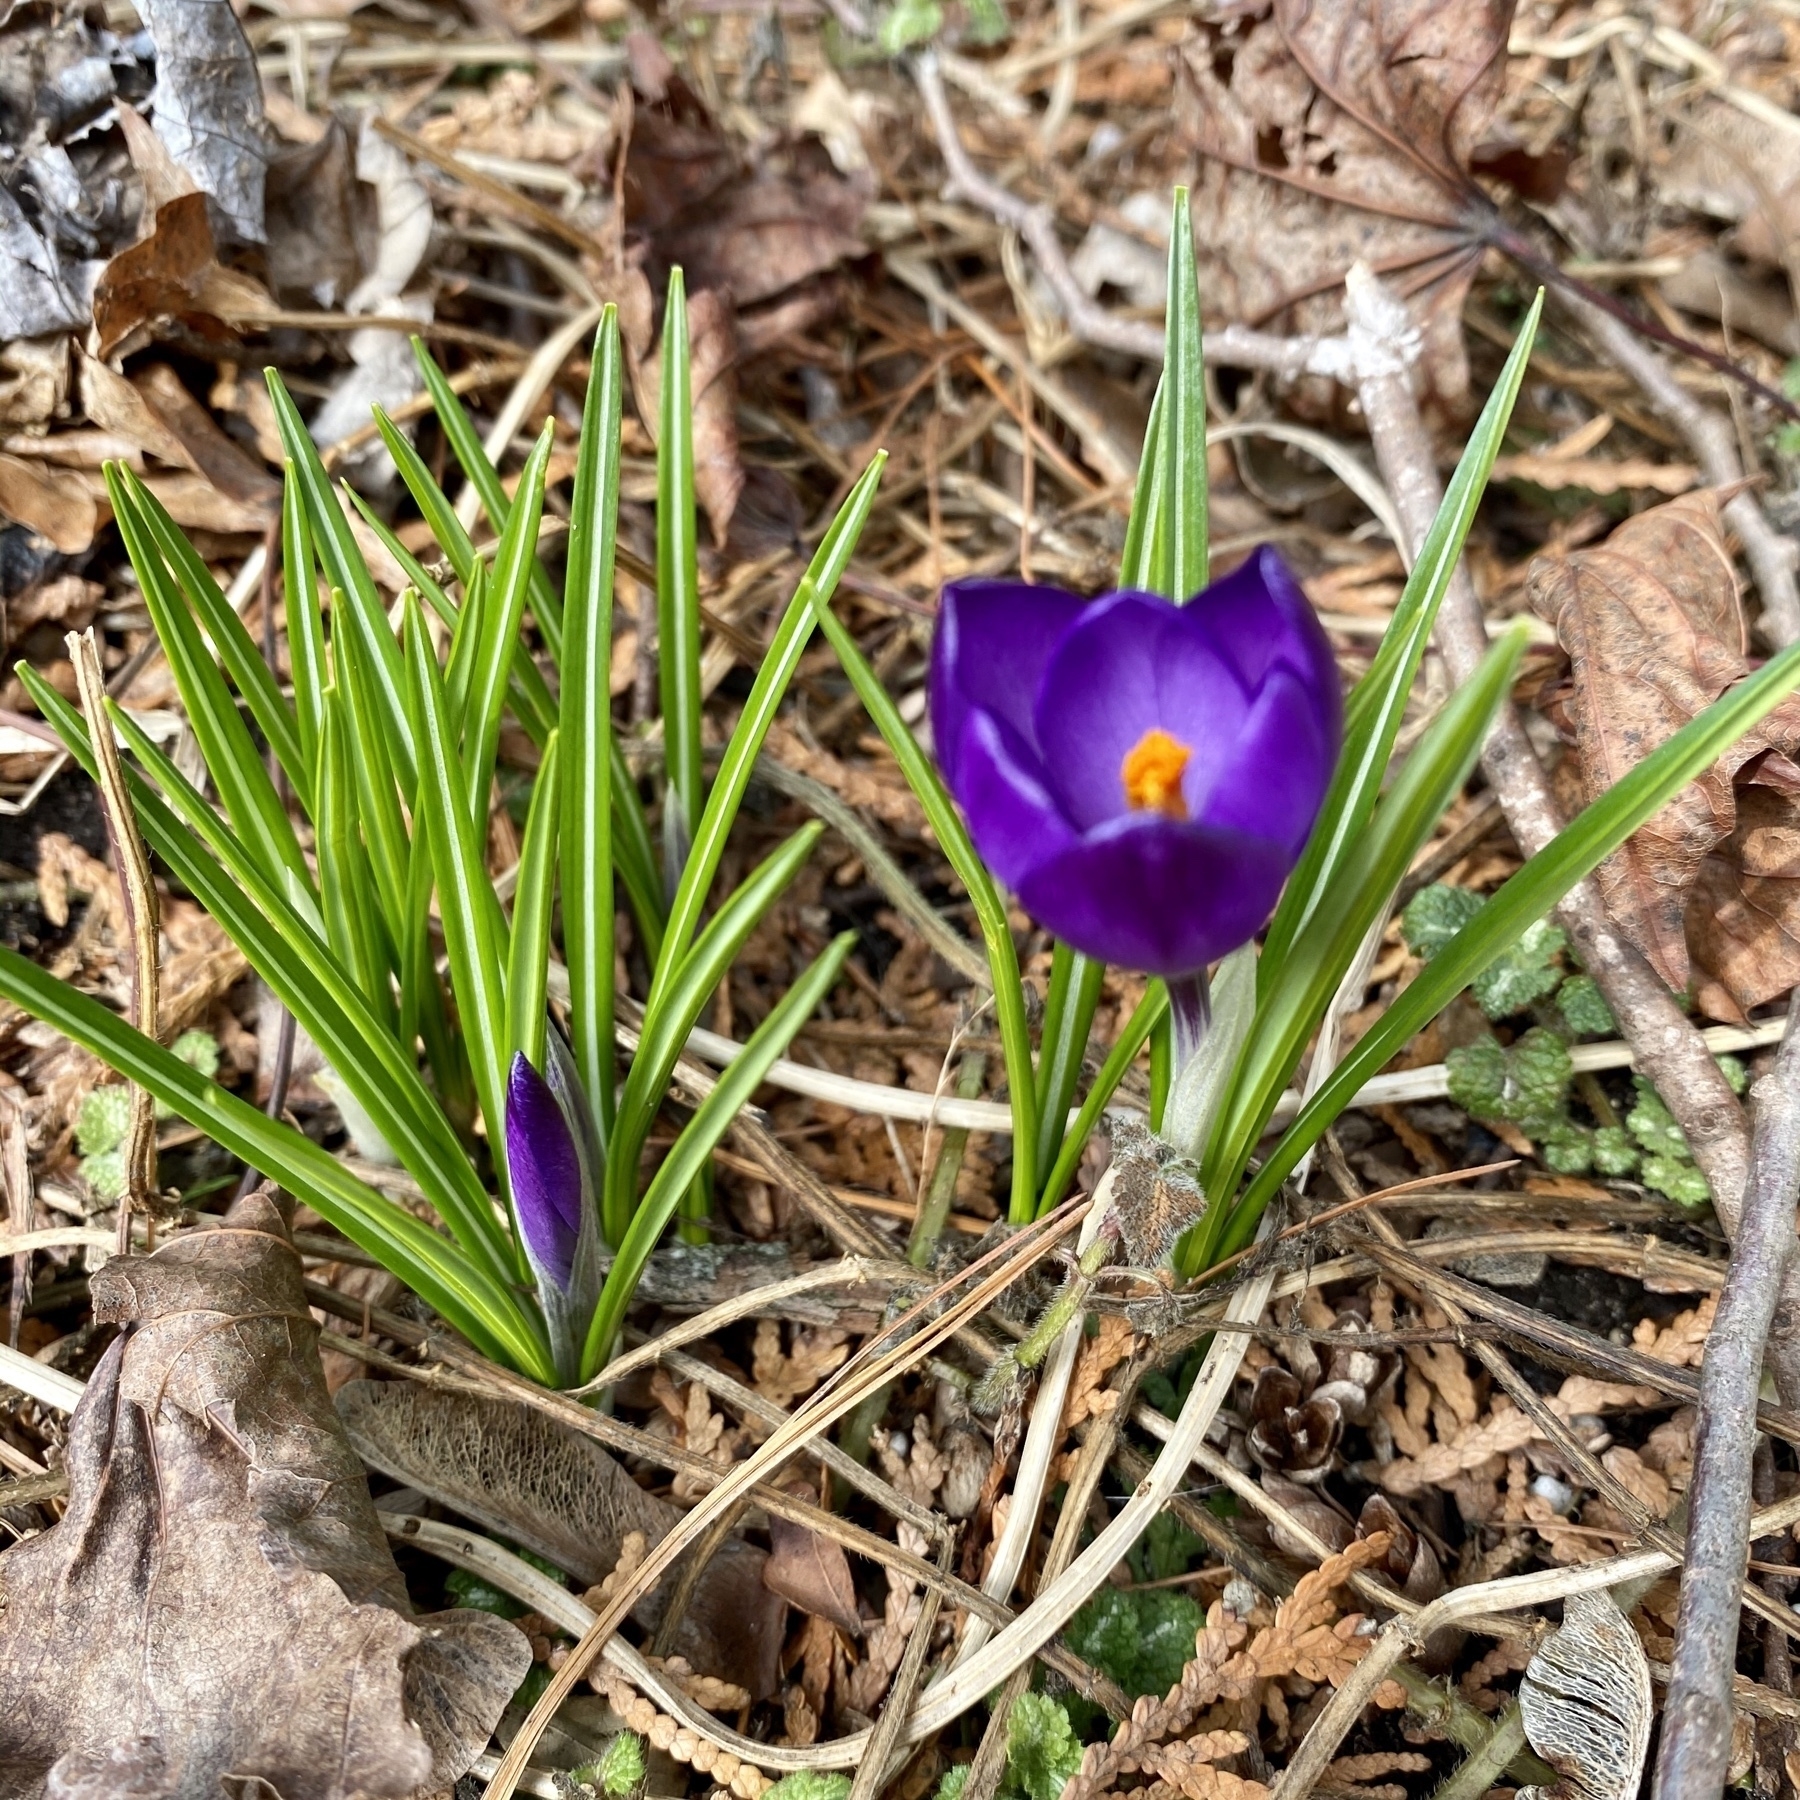 Purple iris flower emerging from the undergrowth